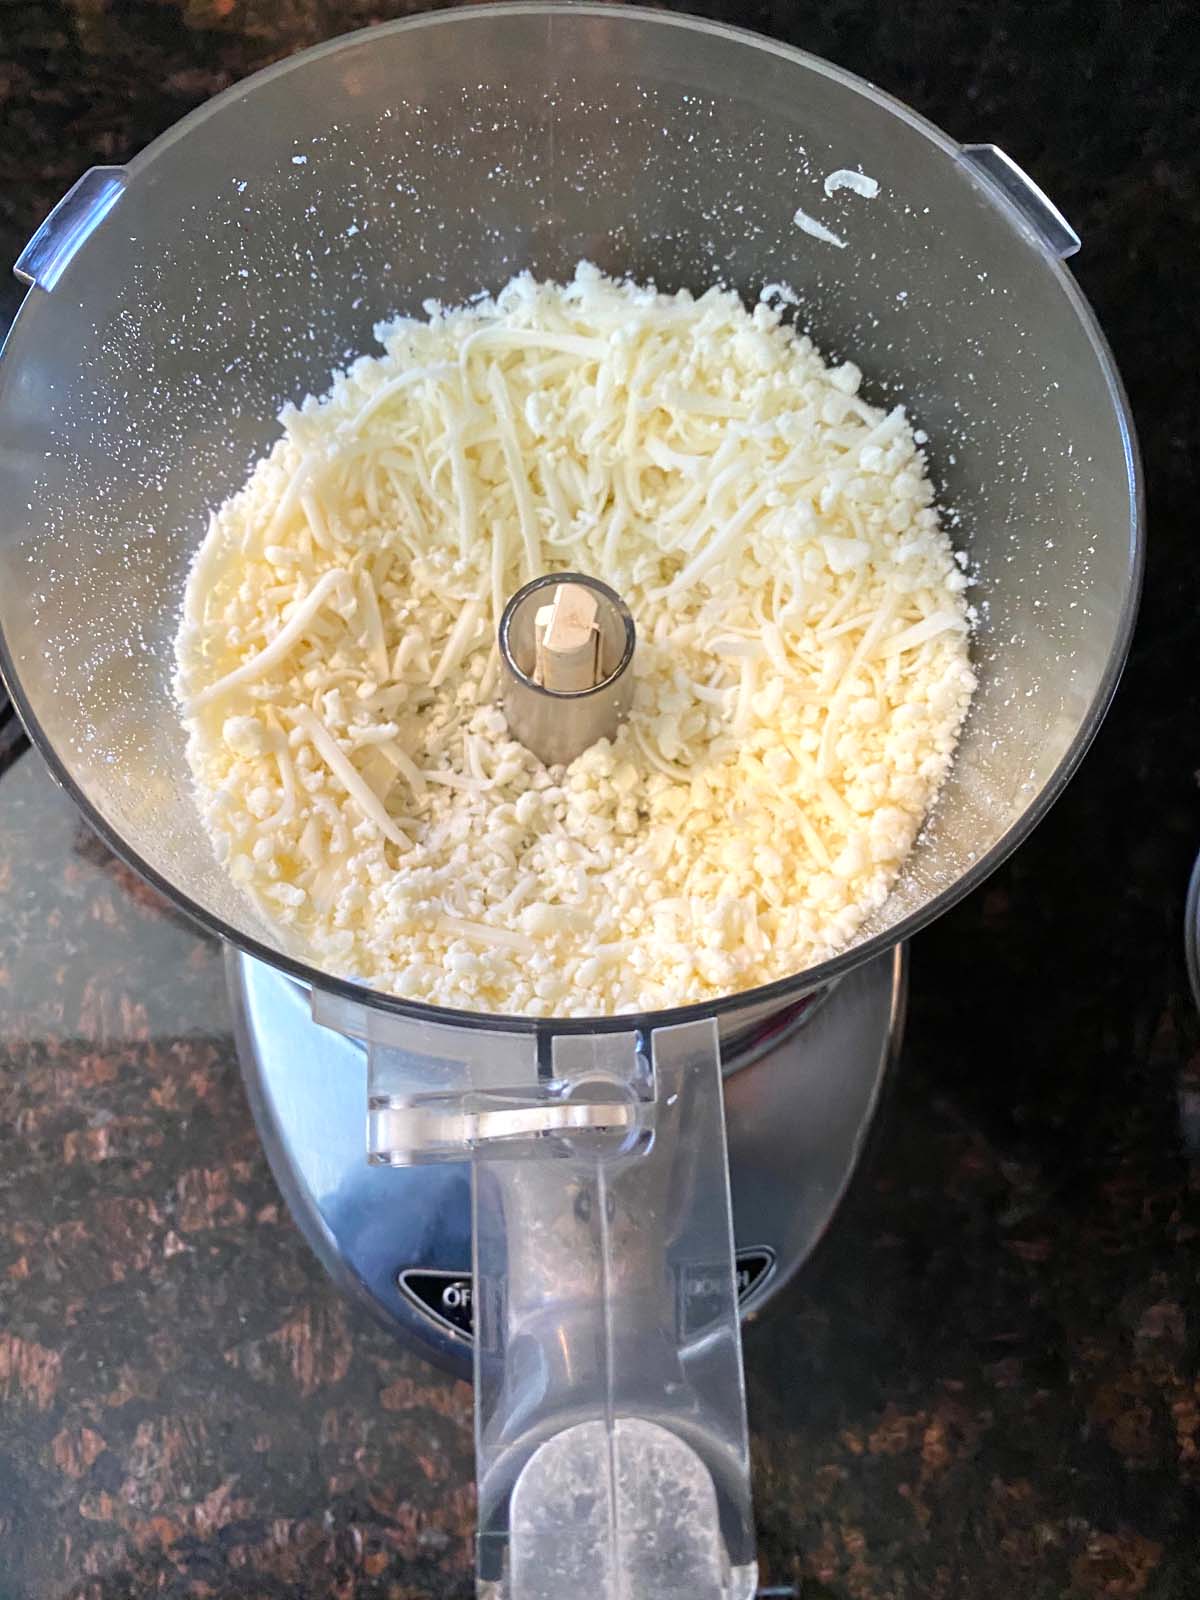 https://www.melaniecooks.com/wp-content/uploads/2021/10/shredded-cheese-in-food-processor-6.jpg